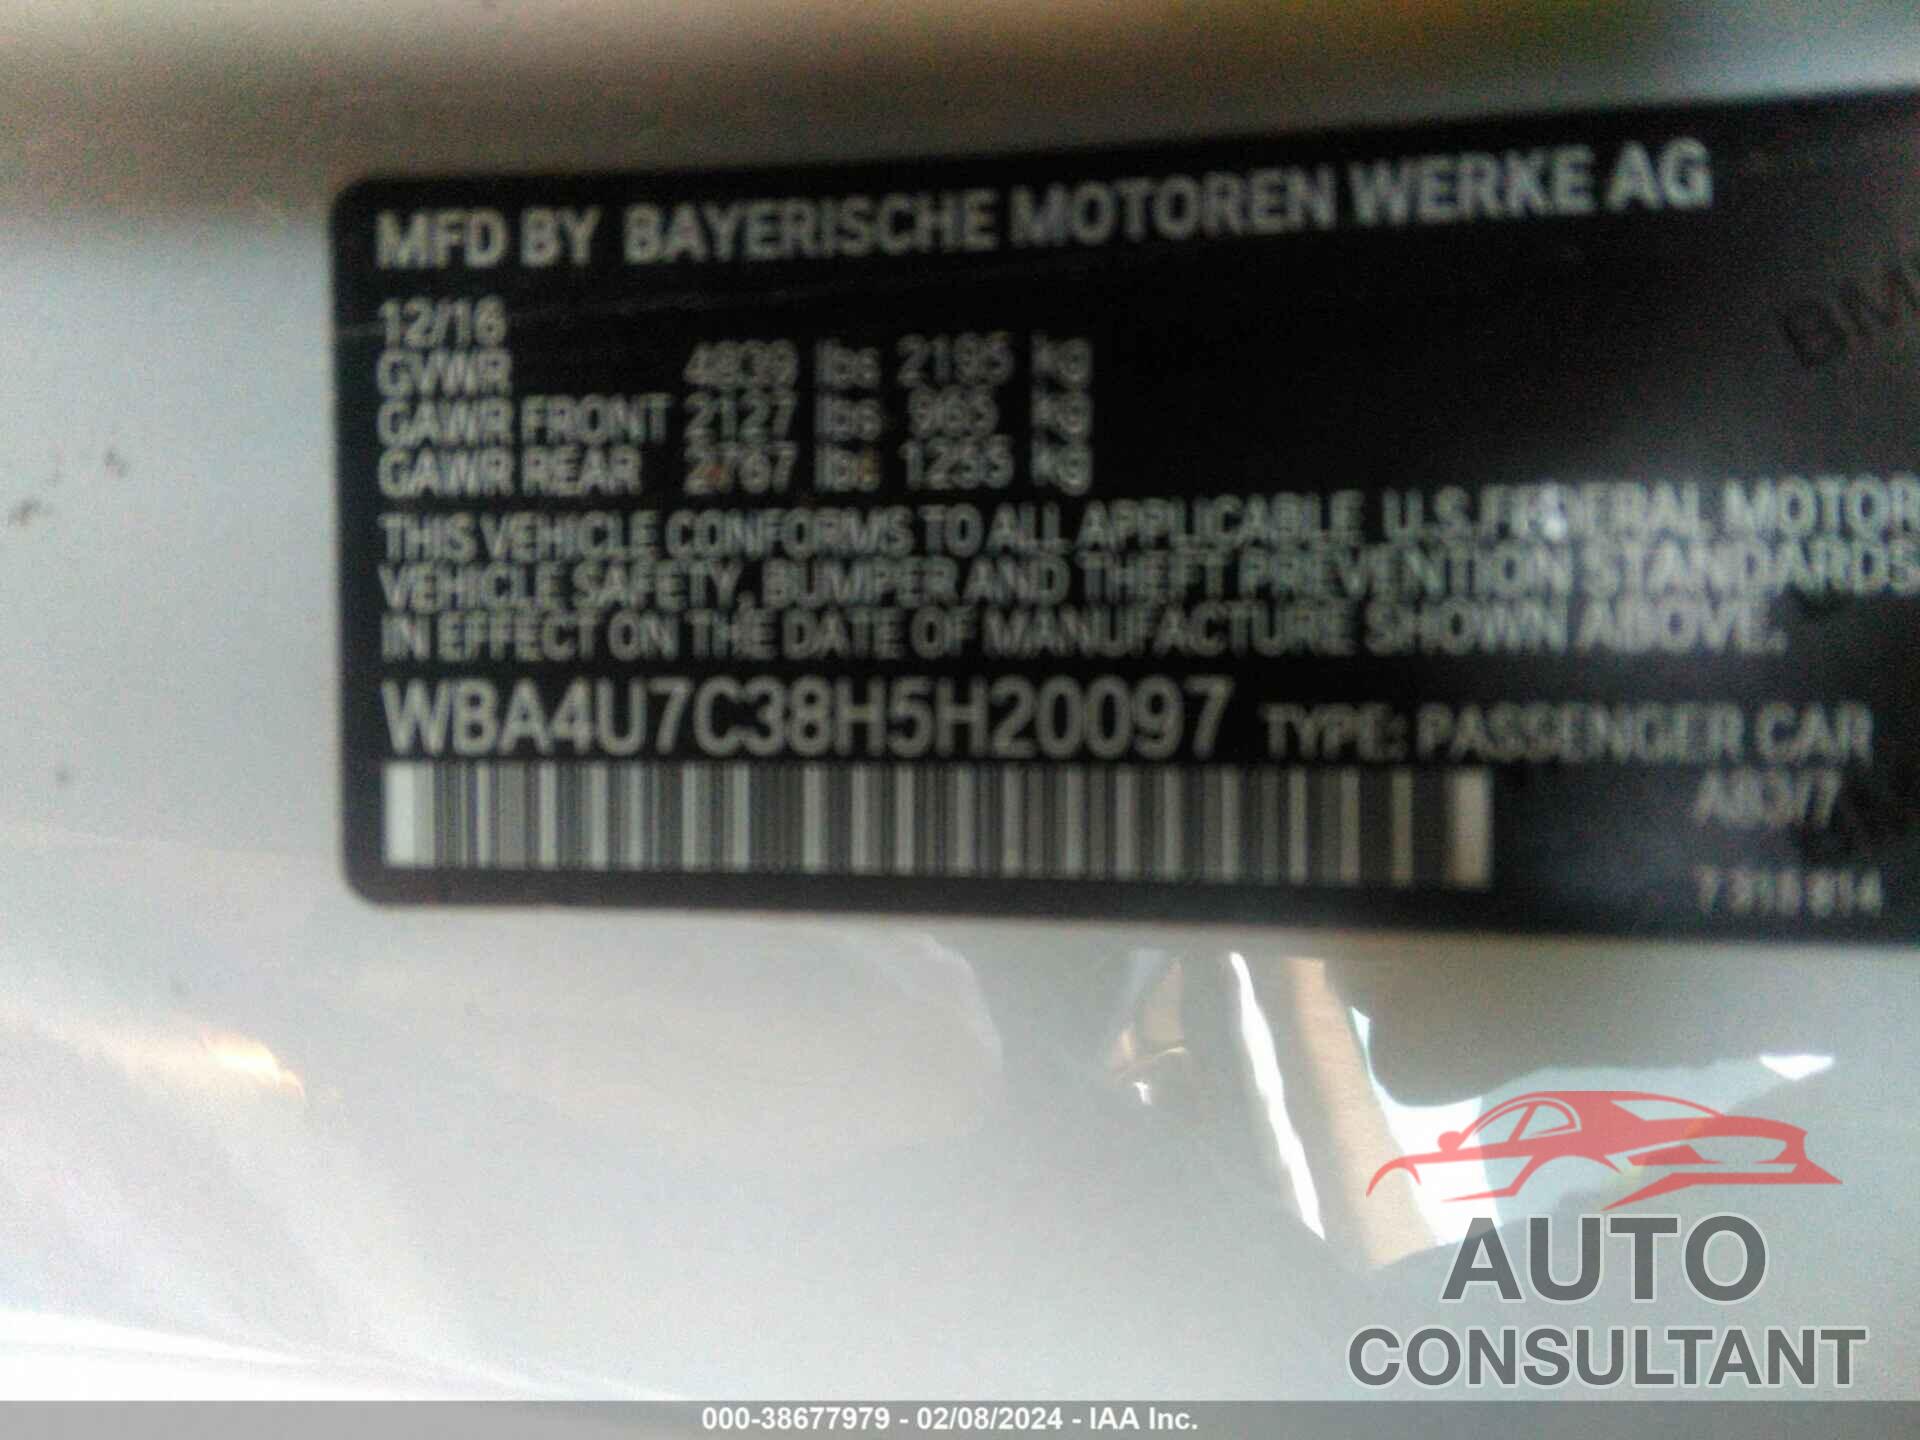 BMW 430I 2017 - WBA4U7C38H5H20097